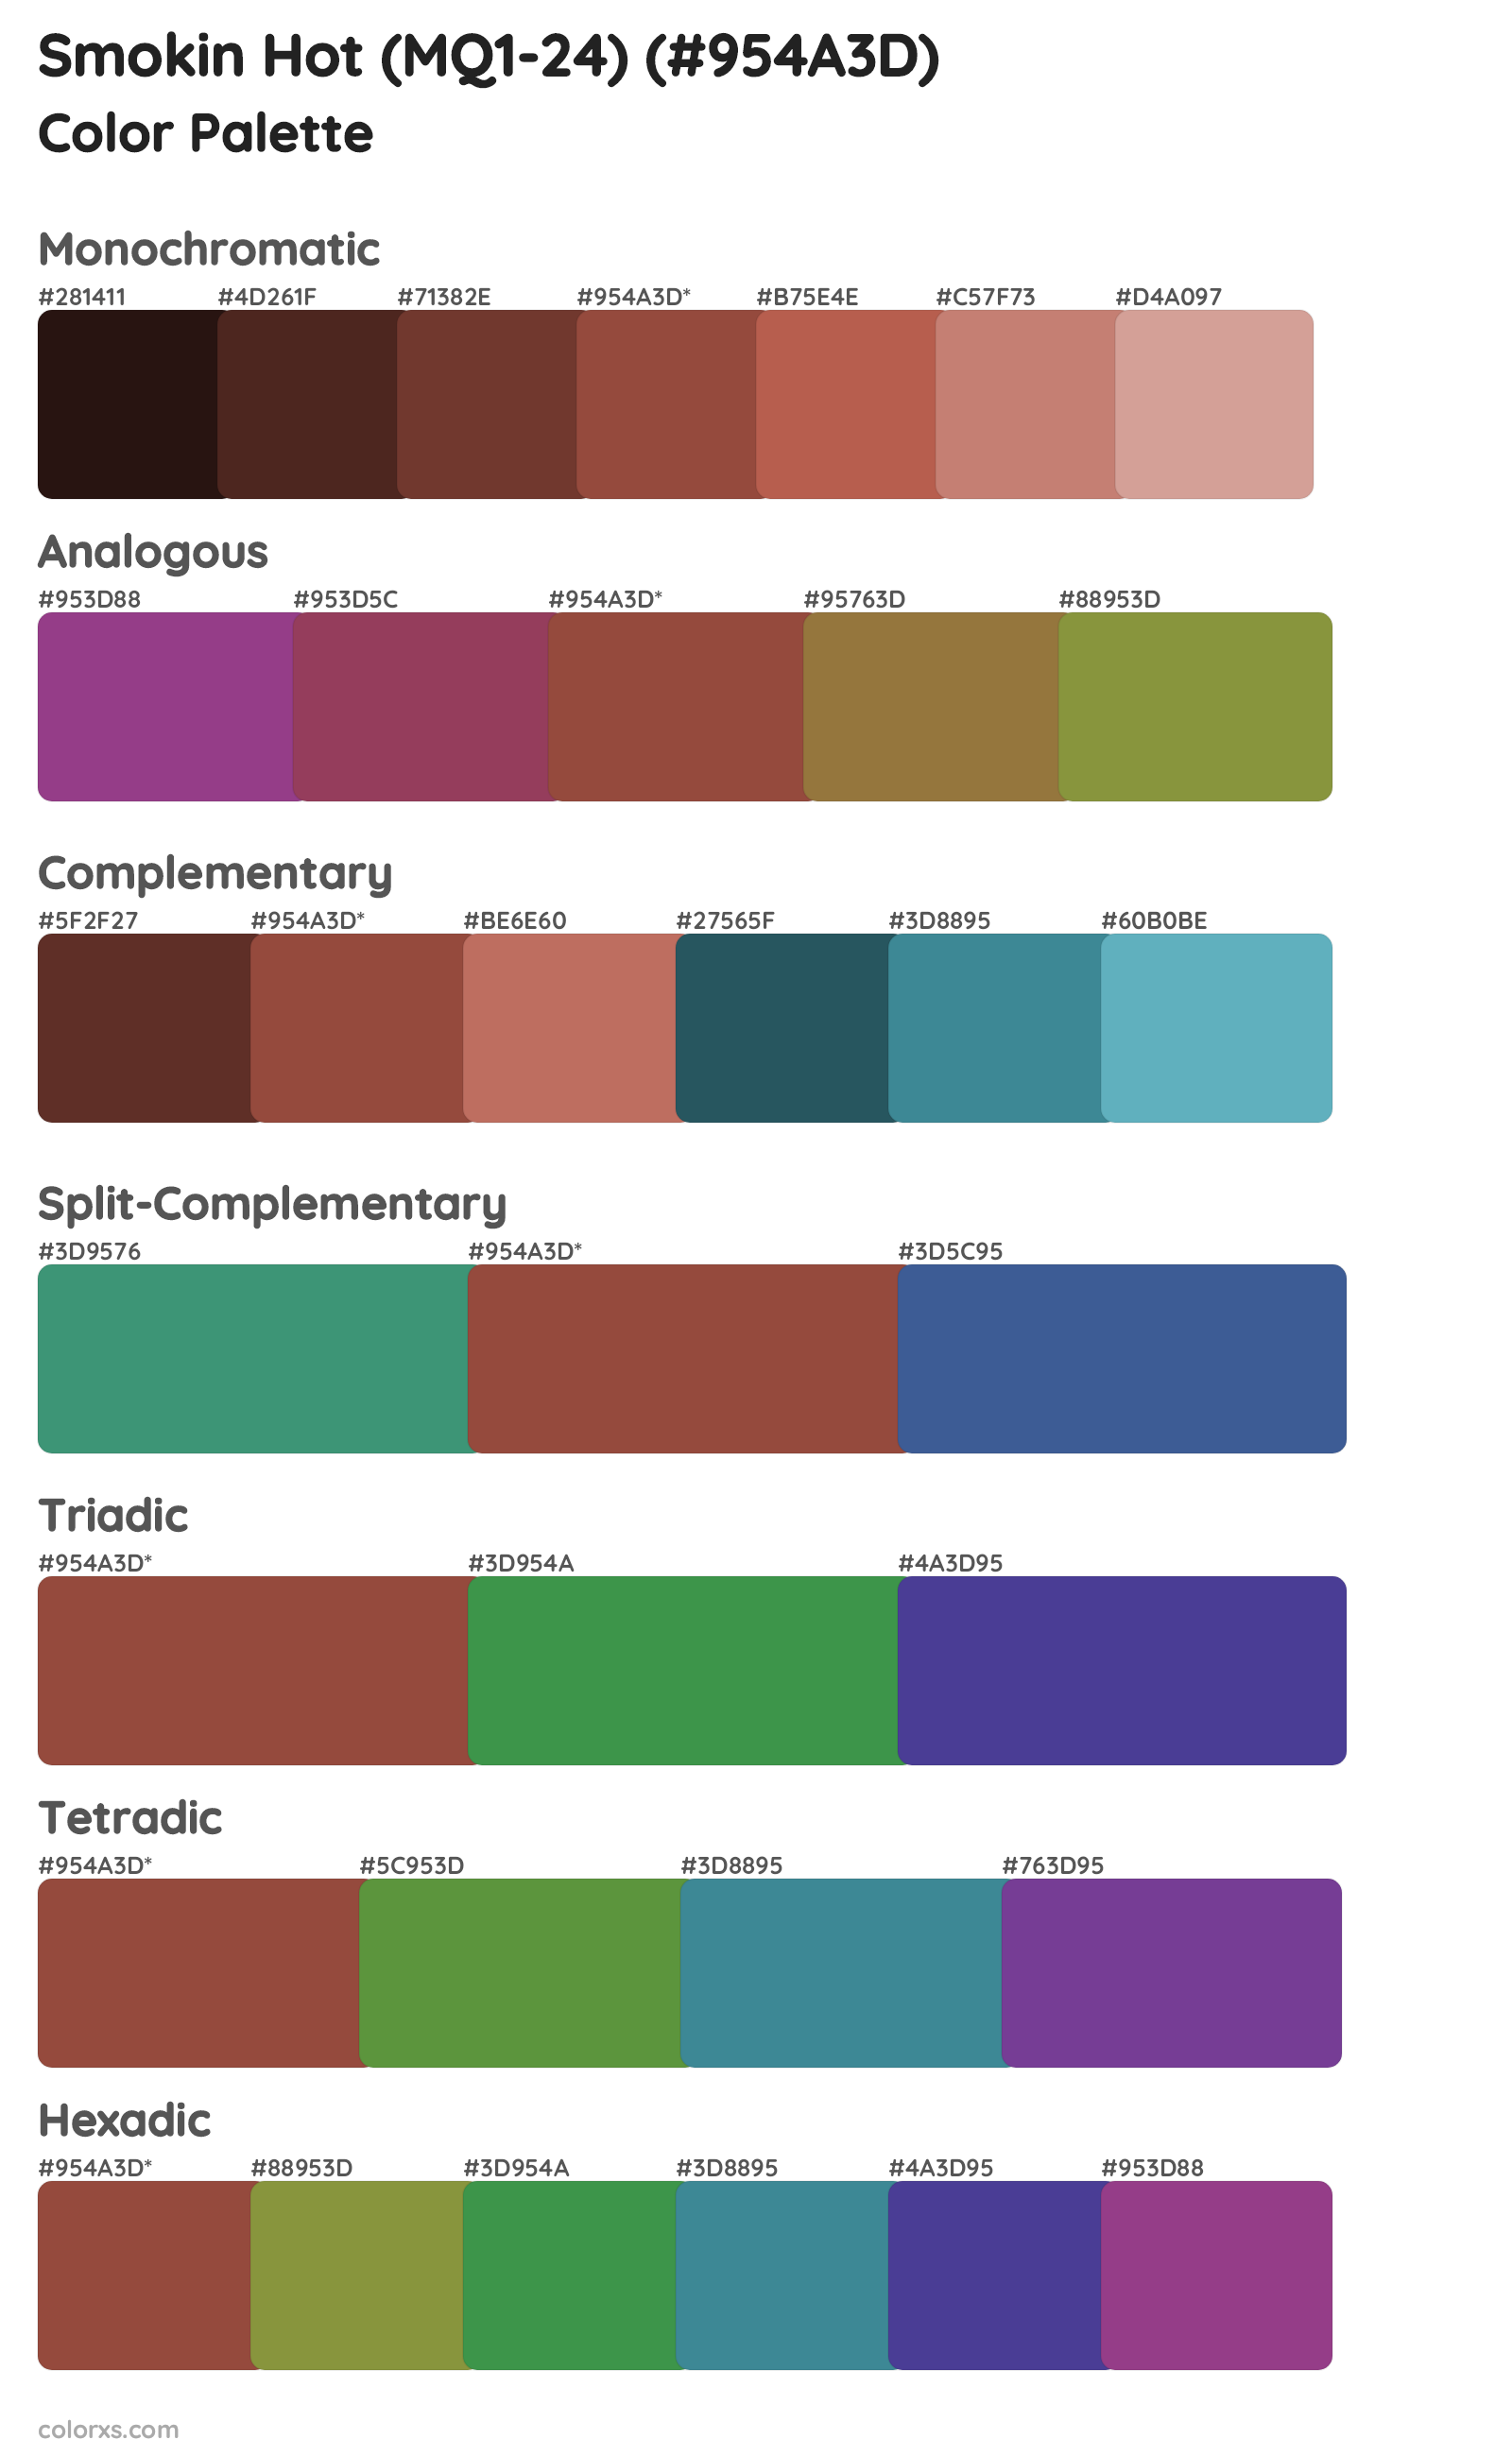 Smokin Hot (MQ1-24) Color Scheme Palettes